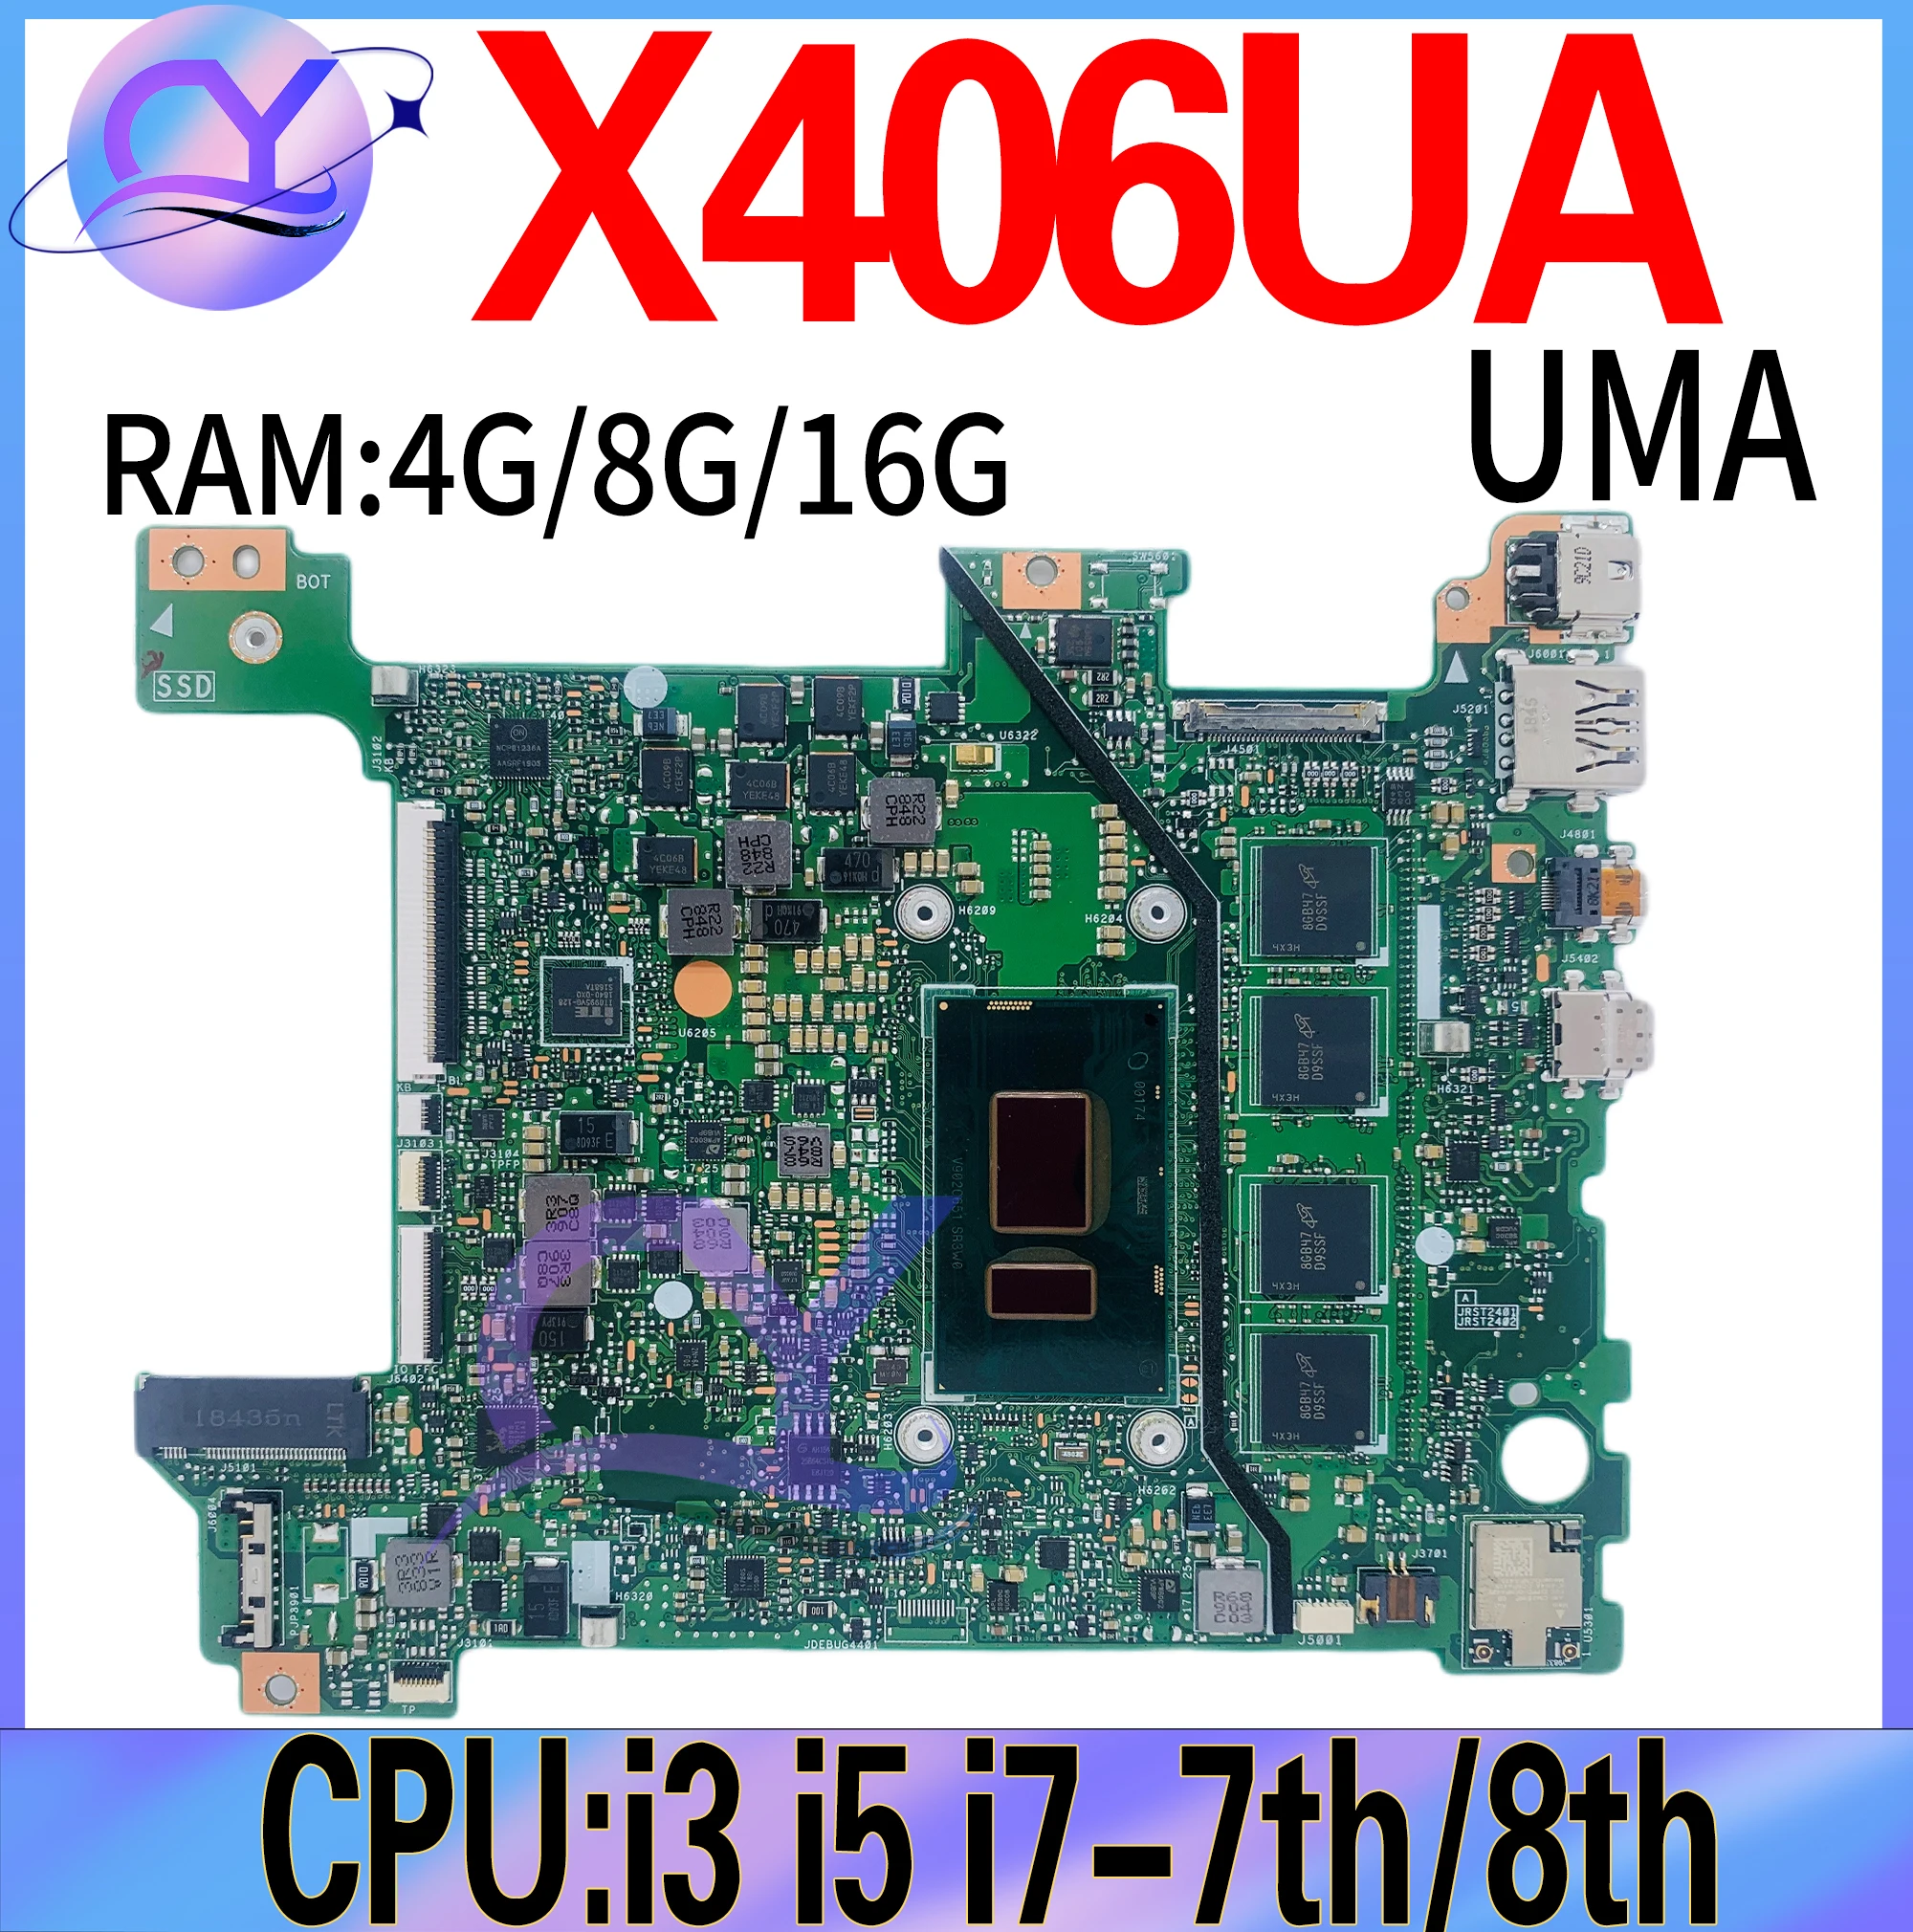 X406UA Laptop Anakart For ASUS VivoBook S14 X406UAR X406U X406UAS S406U V406U Anakart ı3 ı5 ı7-7th / 8th RAM-4G / 8G / 16G